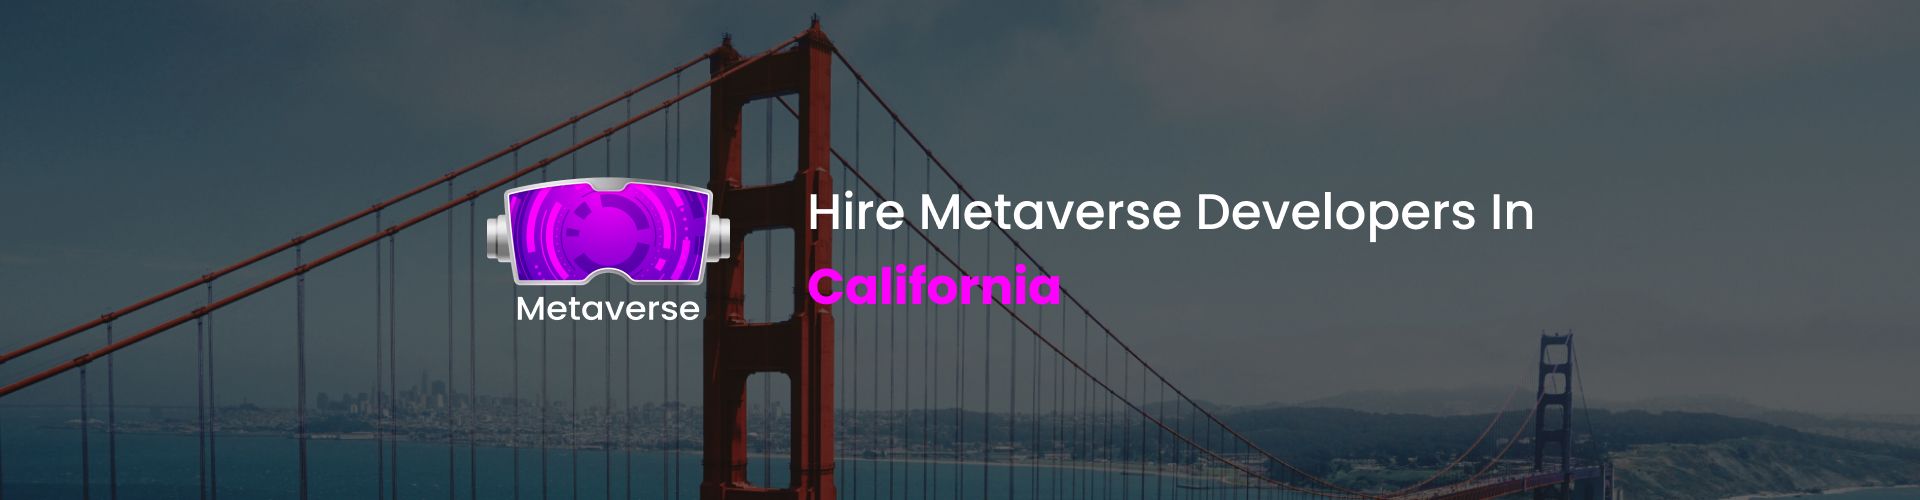 hire metaverse developers in california